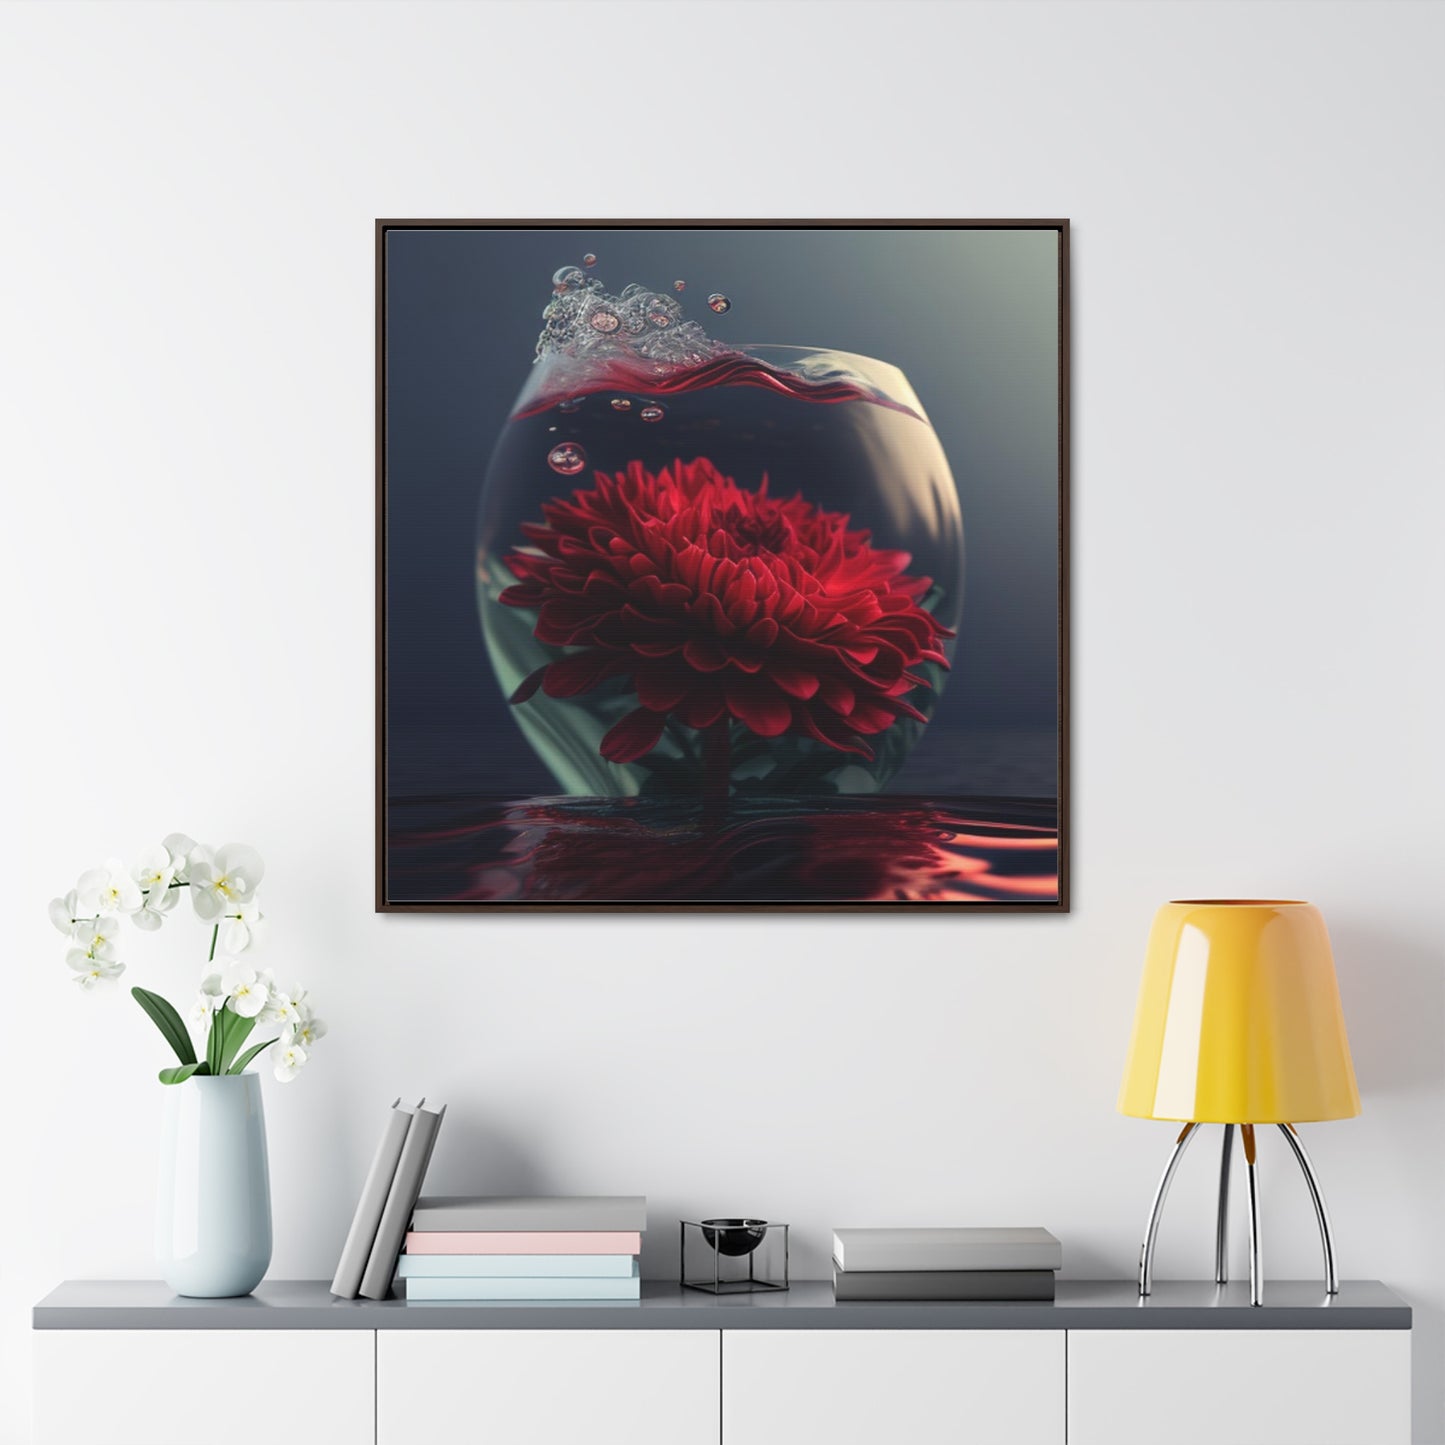 Gallery Canvas Wraps, Square Frame Chrysanthemum 1